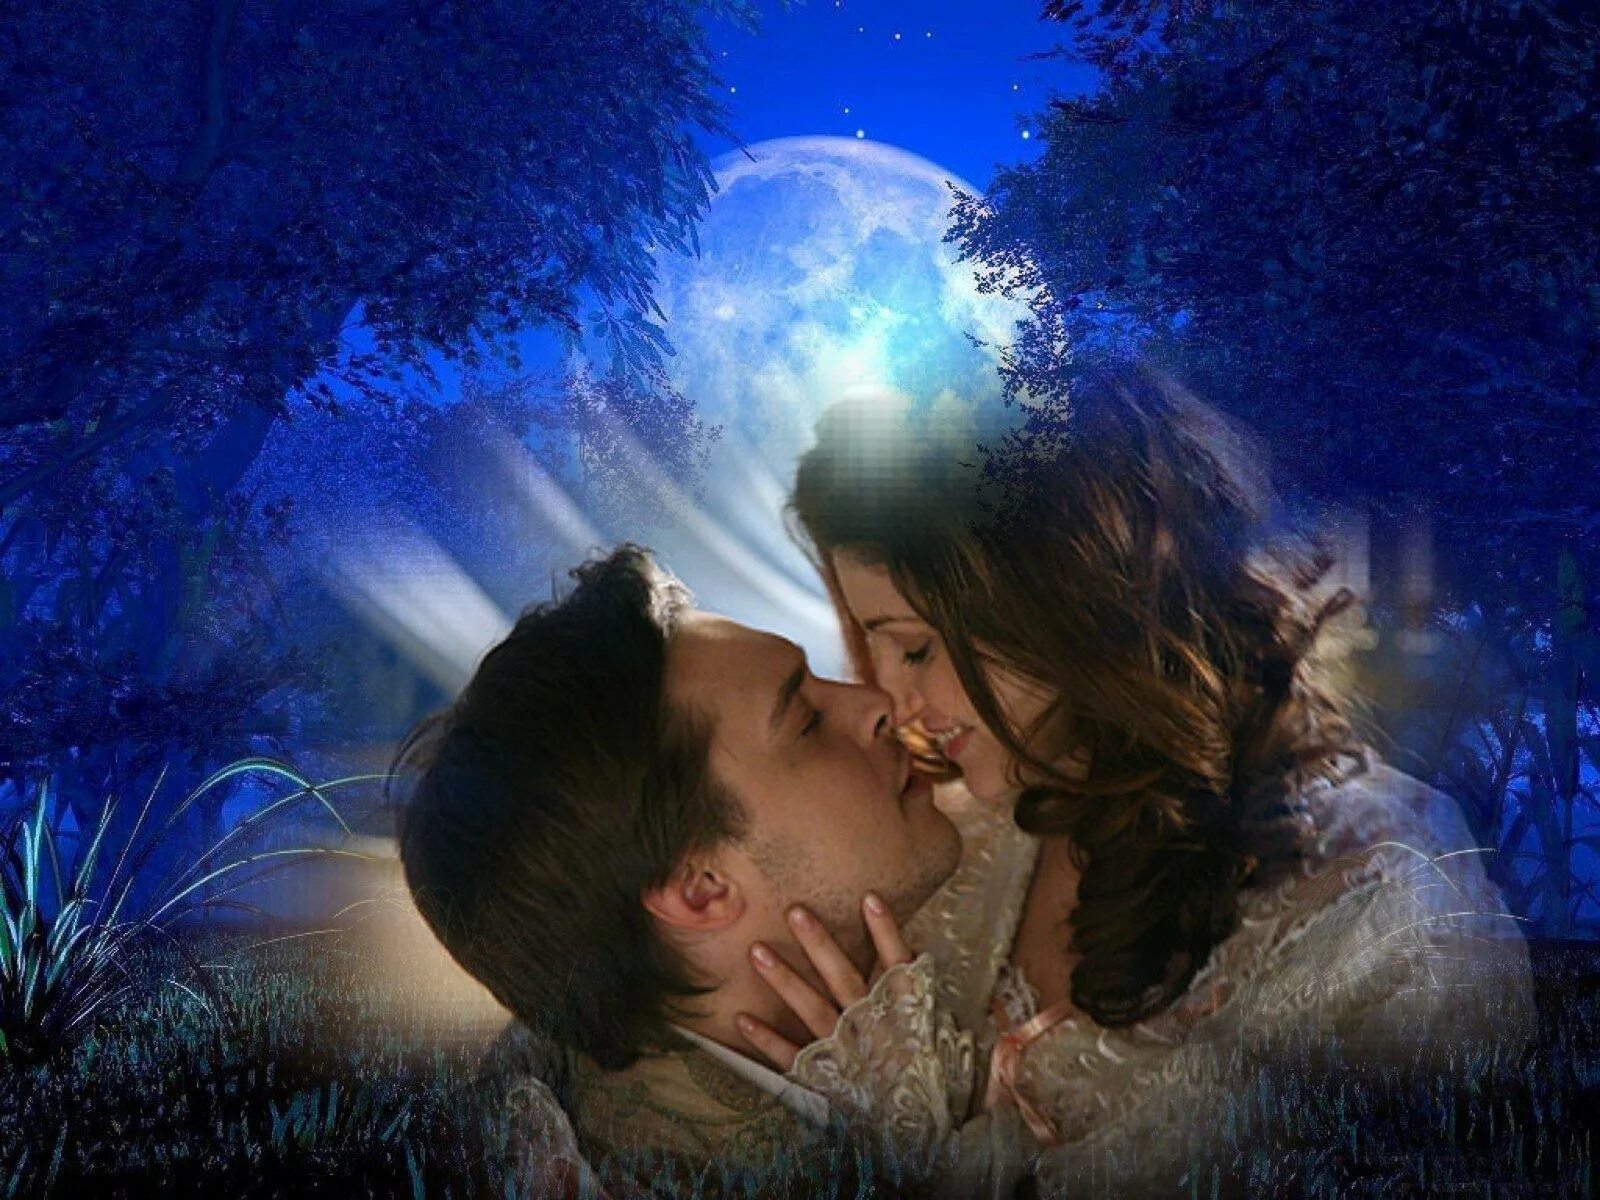 Мужчина целует женщину во сне. Поцелуй на ночь. Волшебный поцелуй. Романтичная ночь. Нежный поцелуй на ночь.